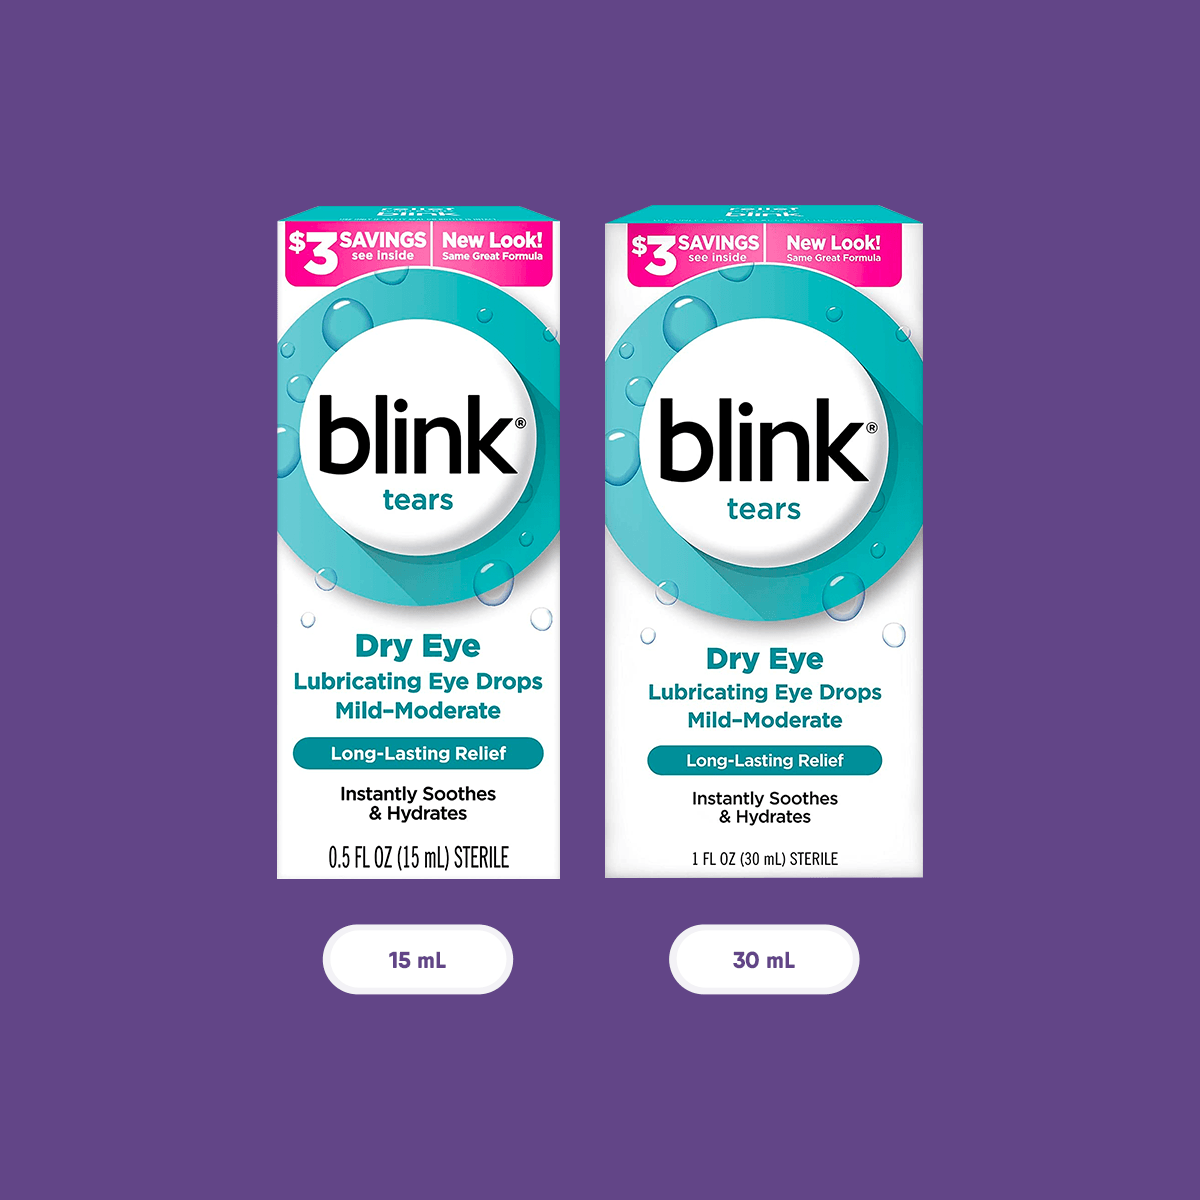  Blink Tears Lubricating Eye Drops, 1 fl oz (30 mL) Eye